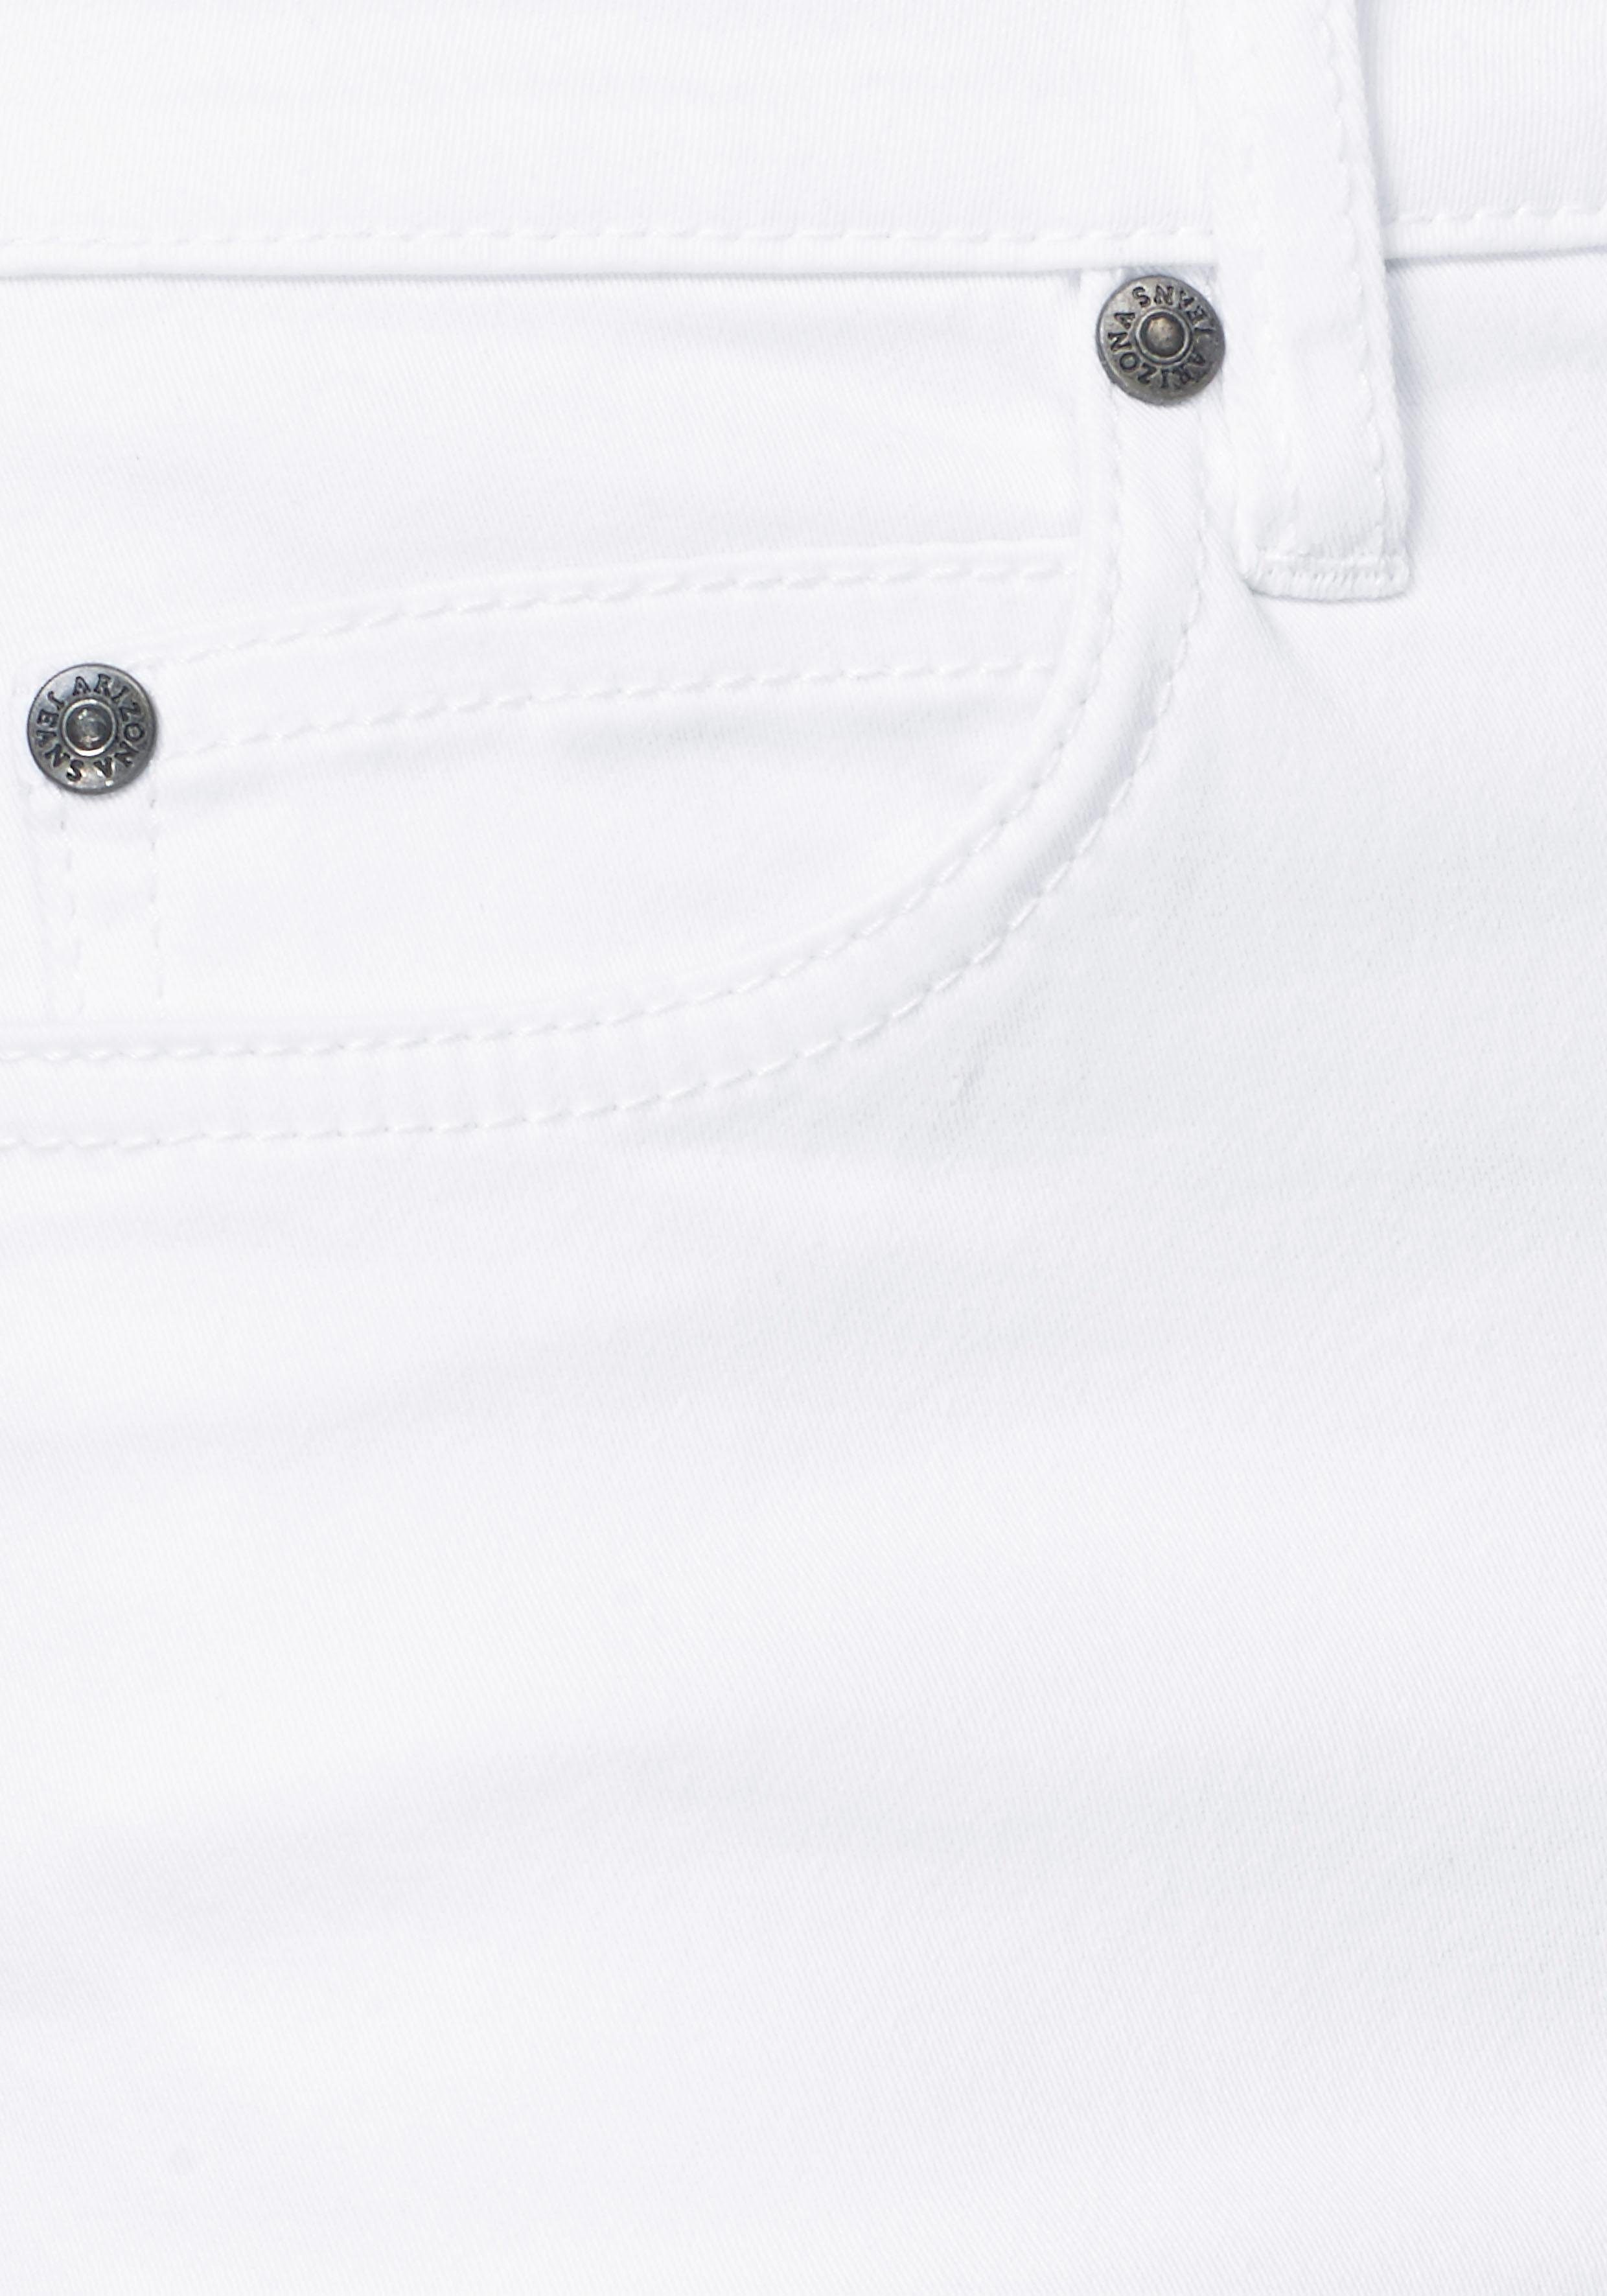 Bootcut-Jeans Waist Arizona Comfort-Fit High white